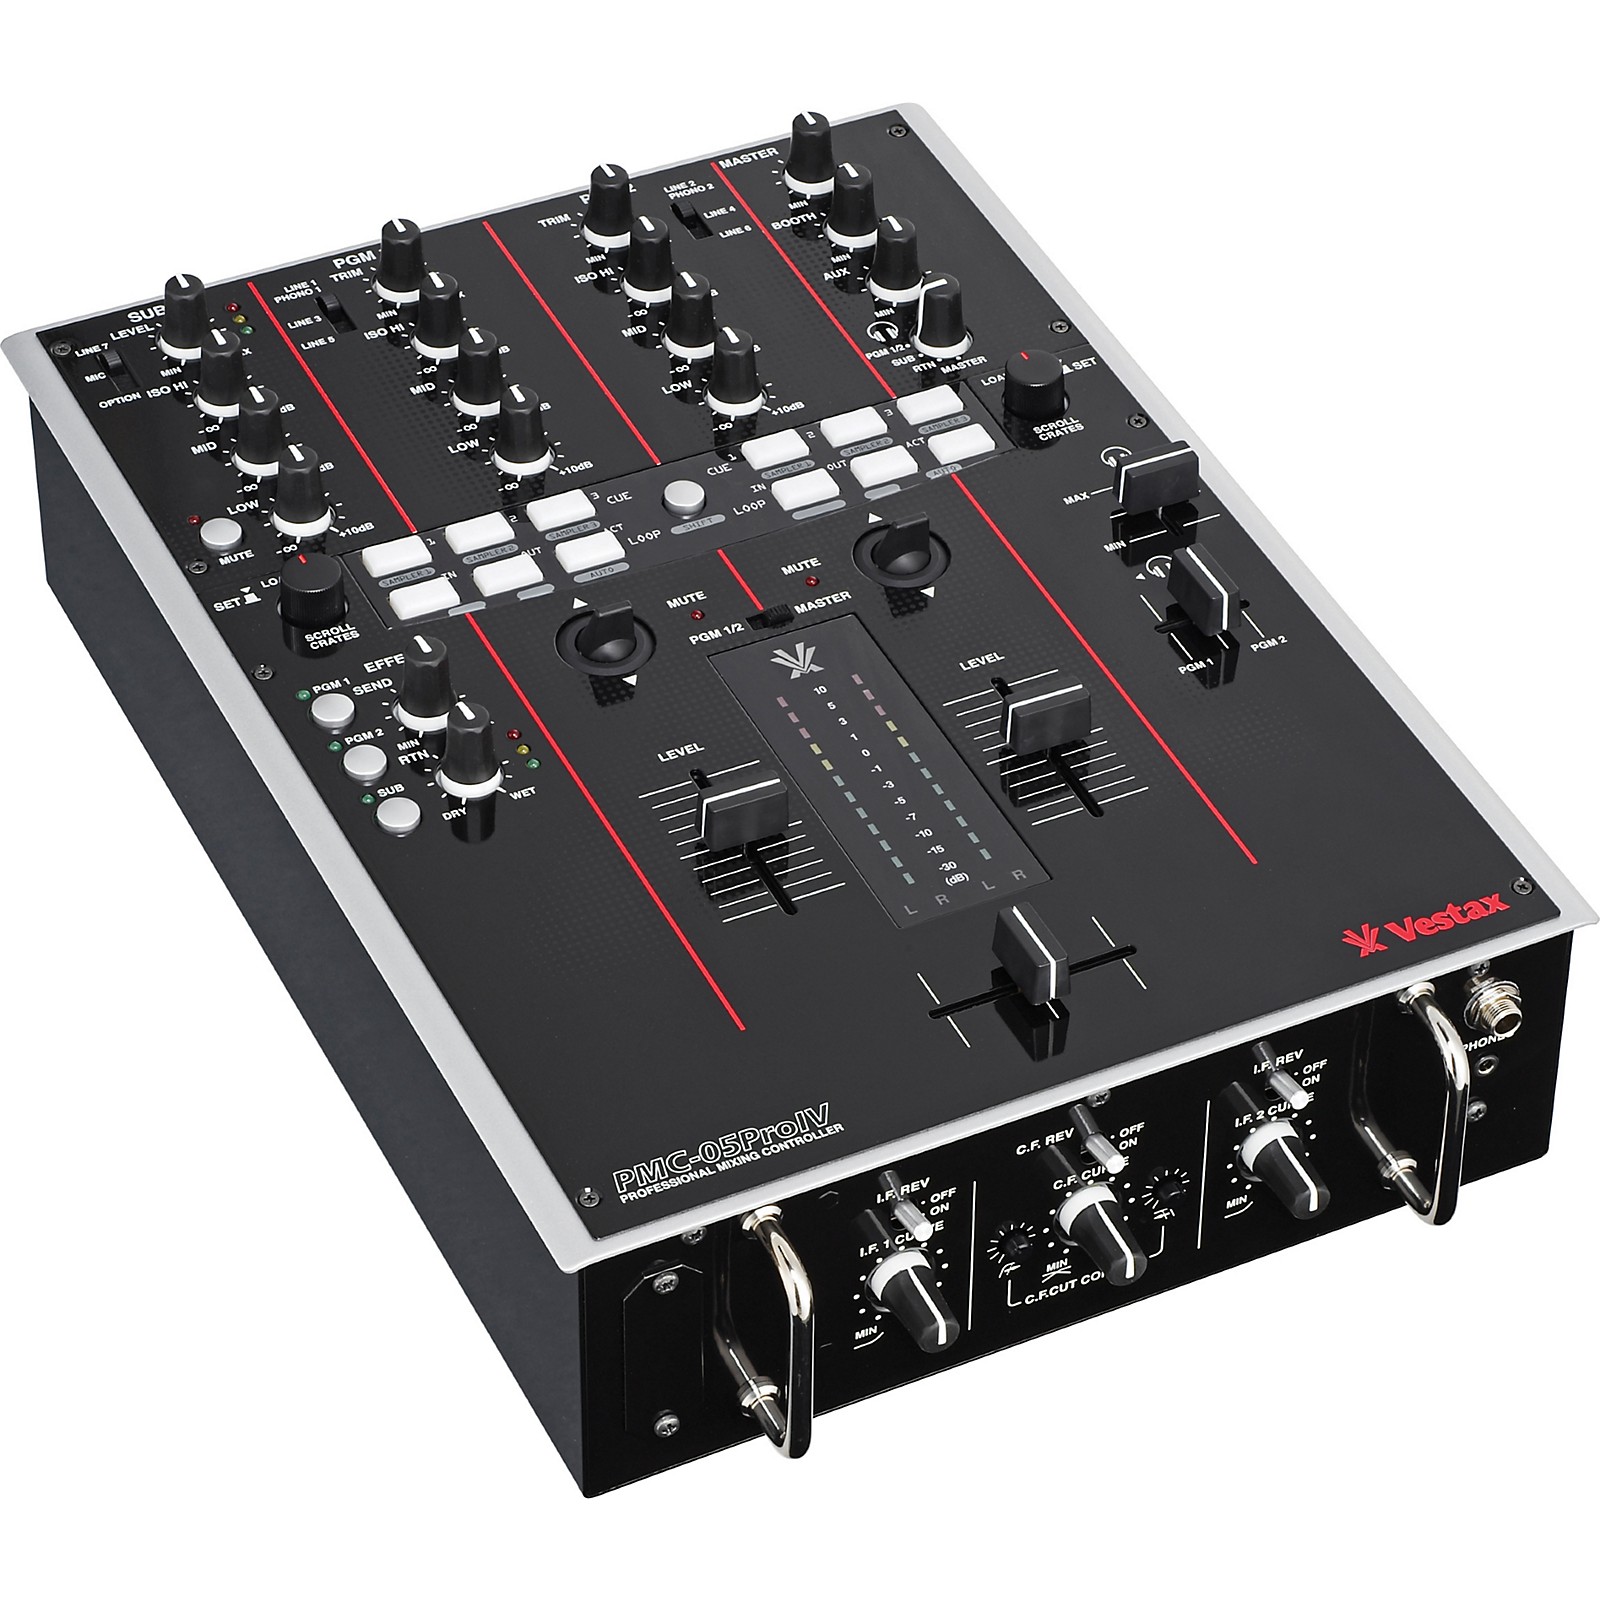 Vestax PMC-05 ProIV 2-Channel Digital DJ Battle mixer with MIDI